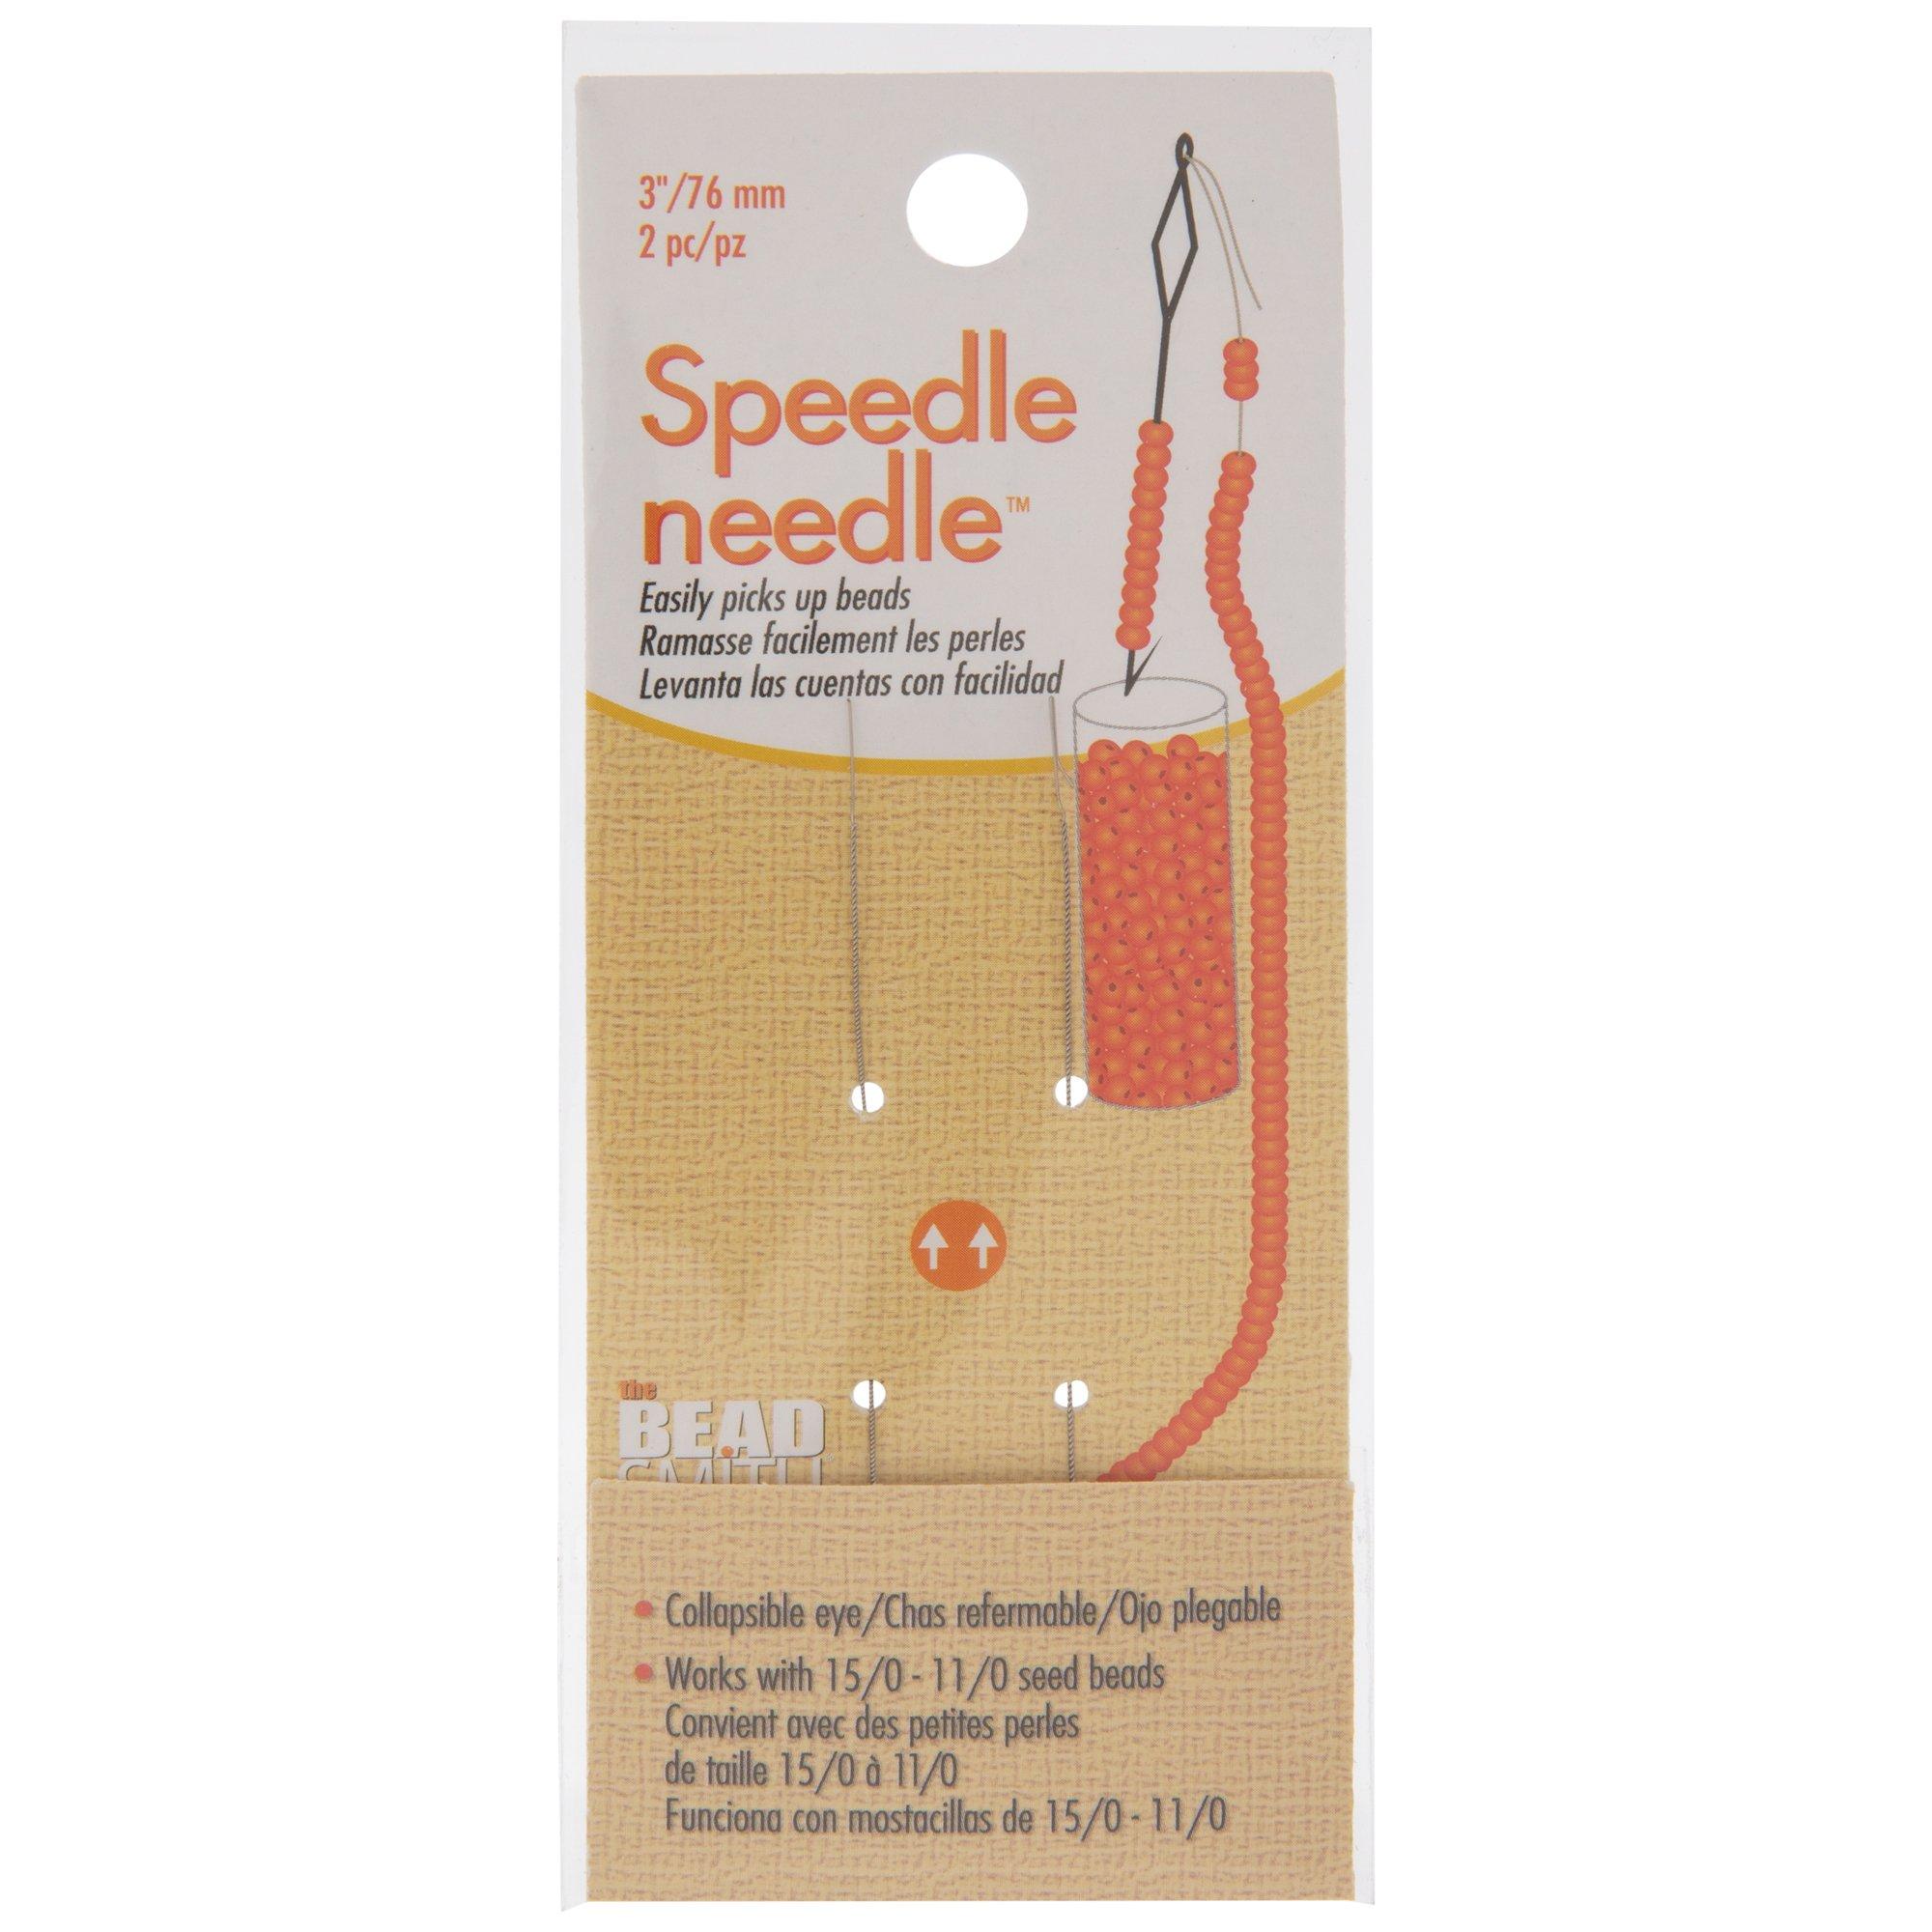 How to Use the Speedle Needle 